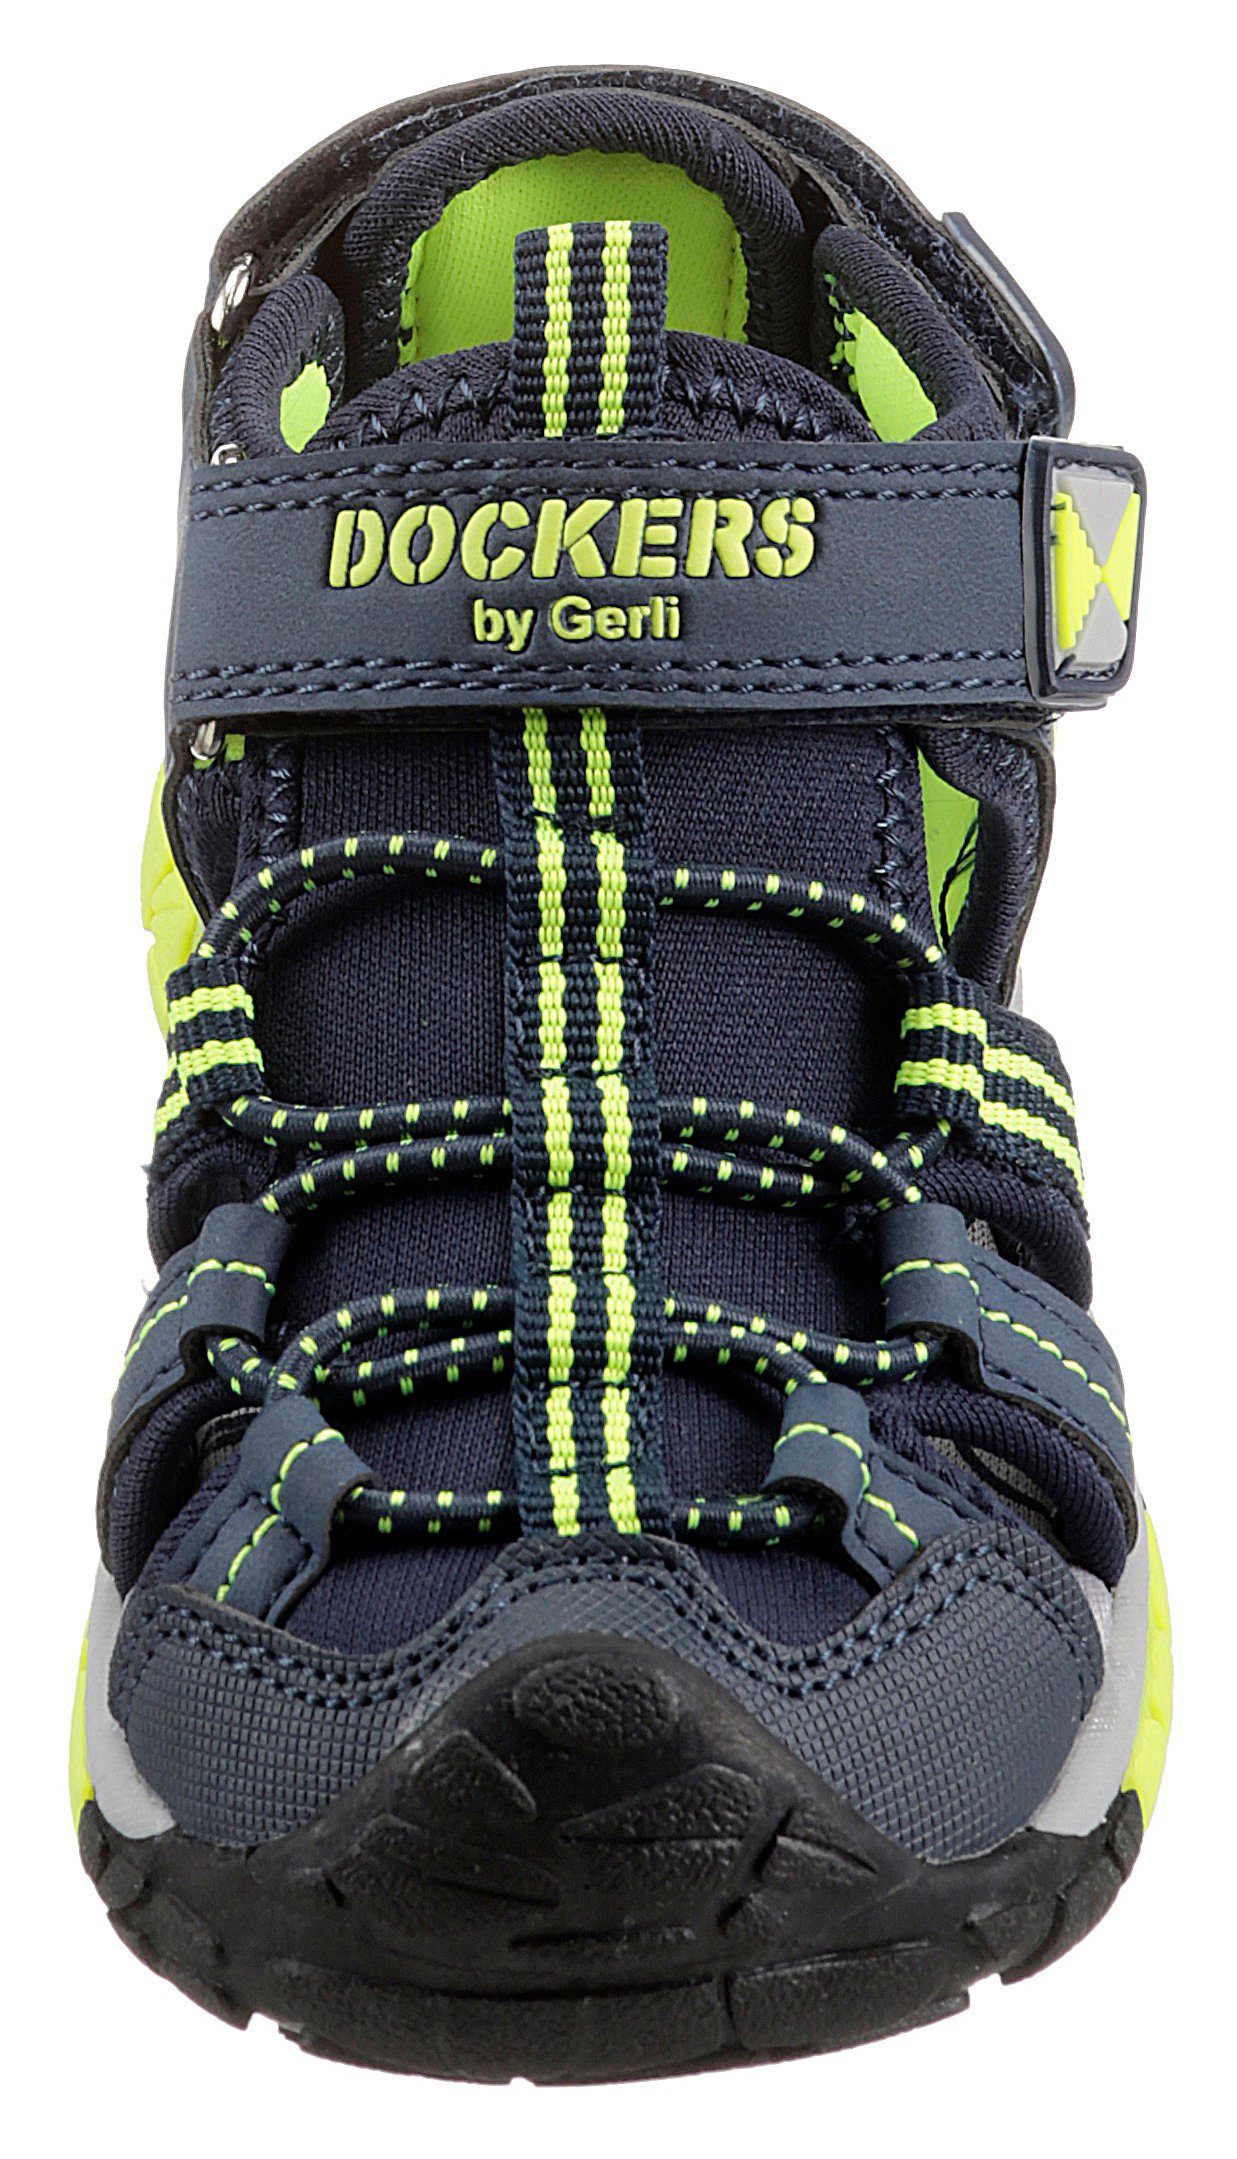 Dockers by Gerli Details Riemchensandale kontrastfarbenen navy-lemon mit